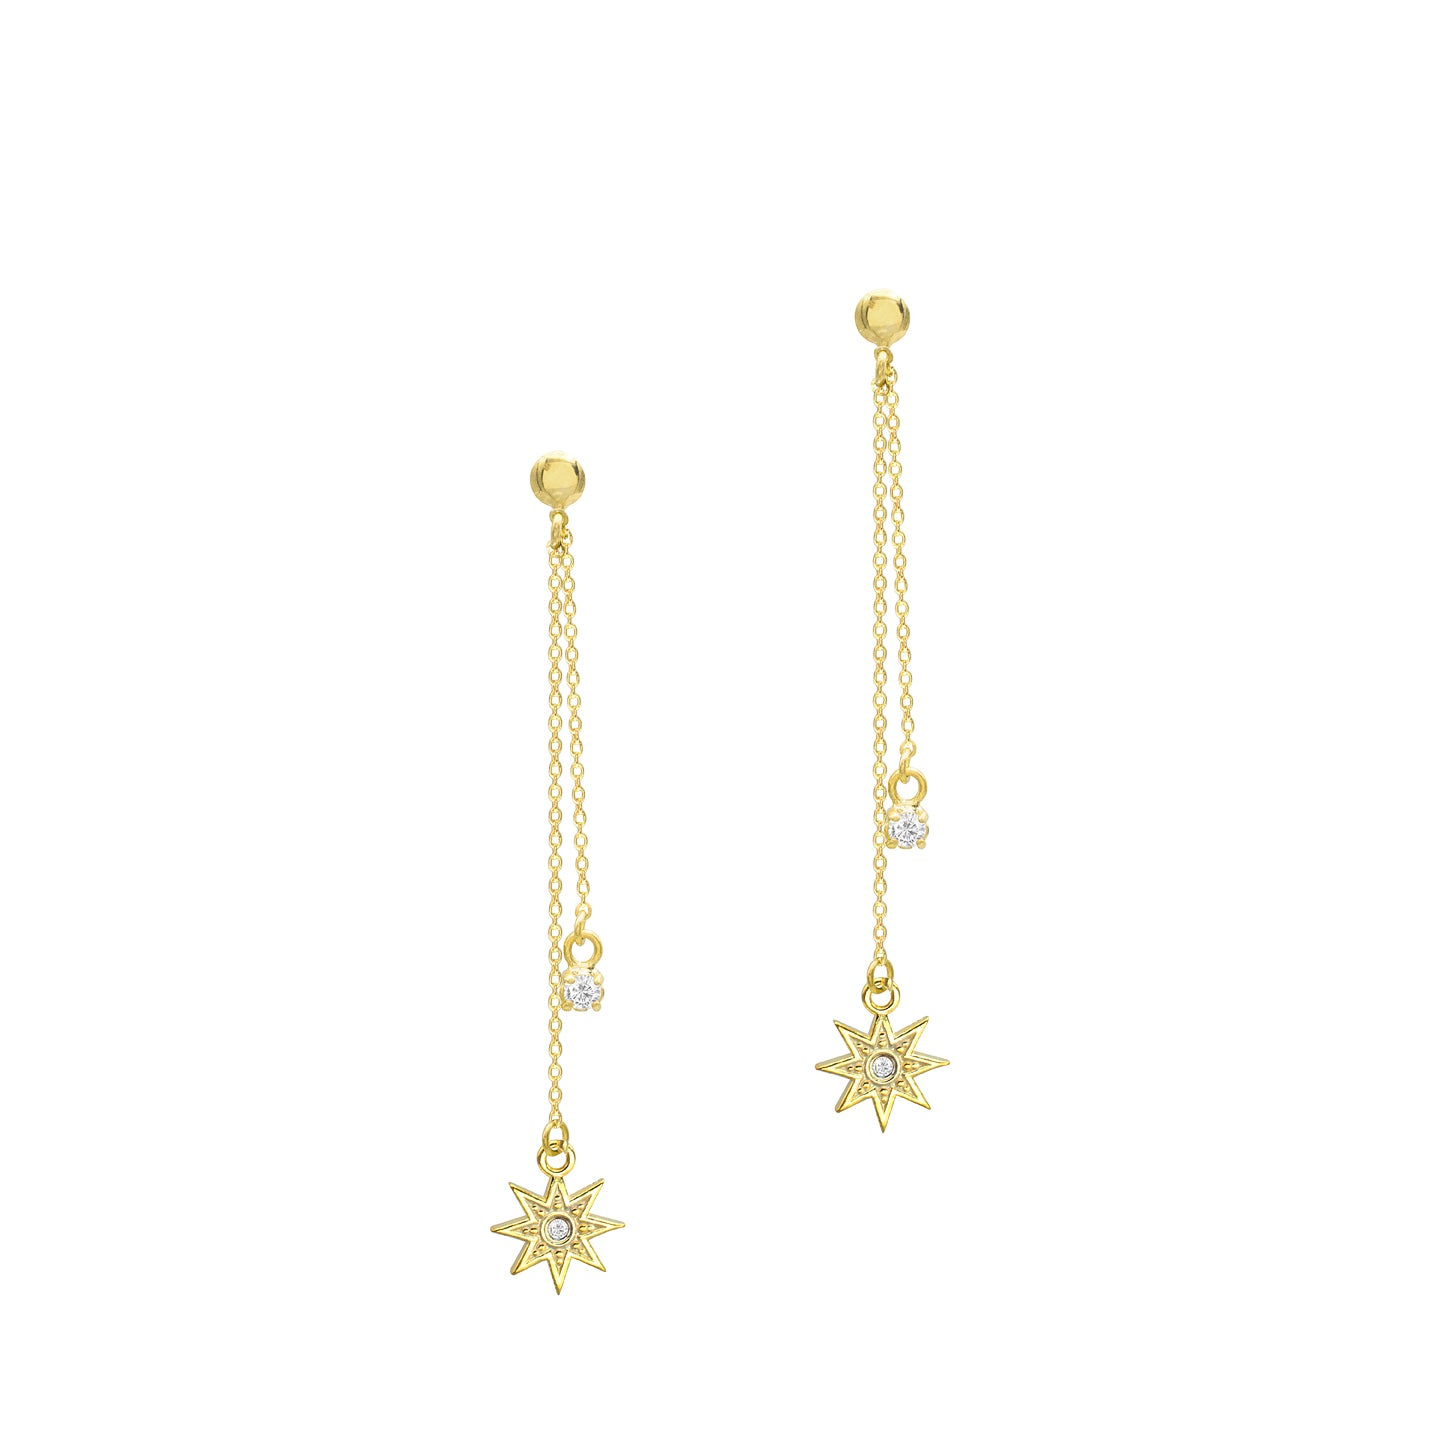 Cercei lungi argint Blessy Star - placati aur galben 18K